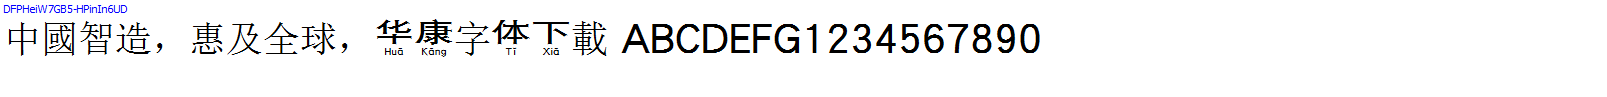 華康字體DFPHeiW7GB5-HPinIn6UD.TTF